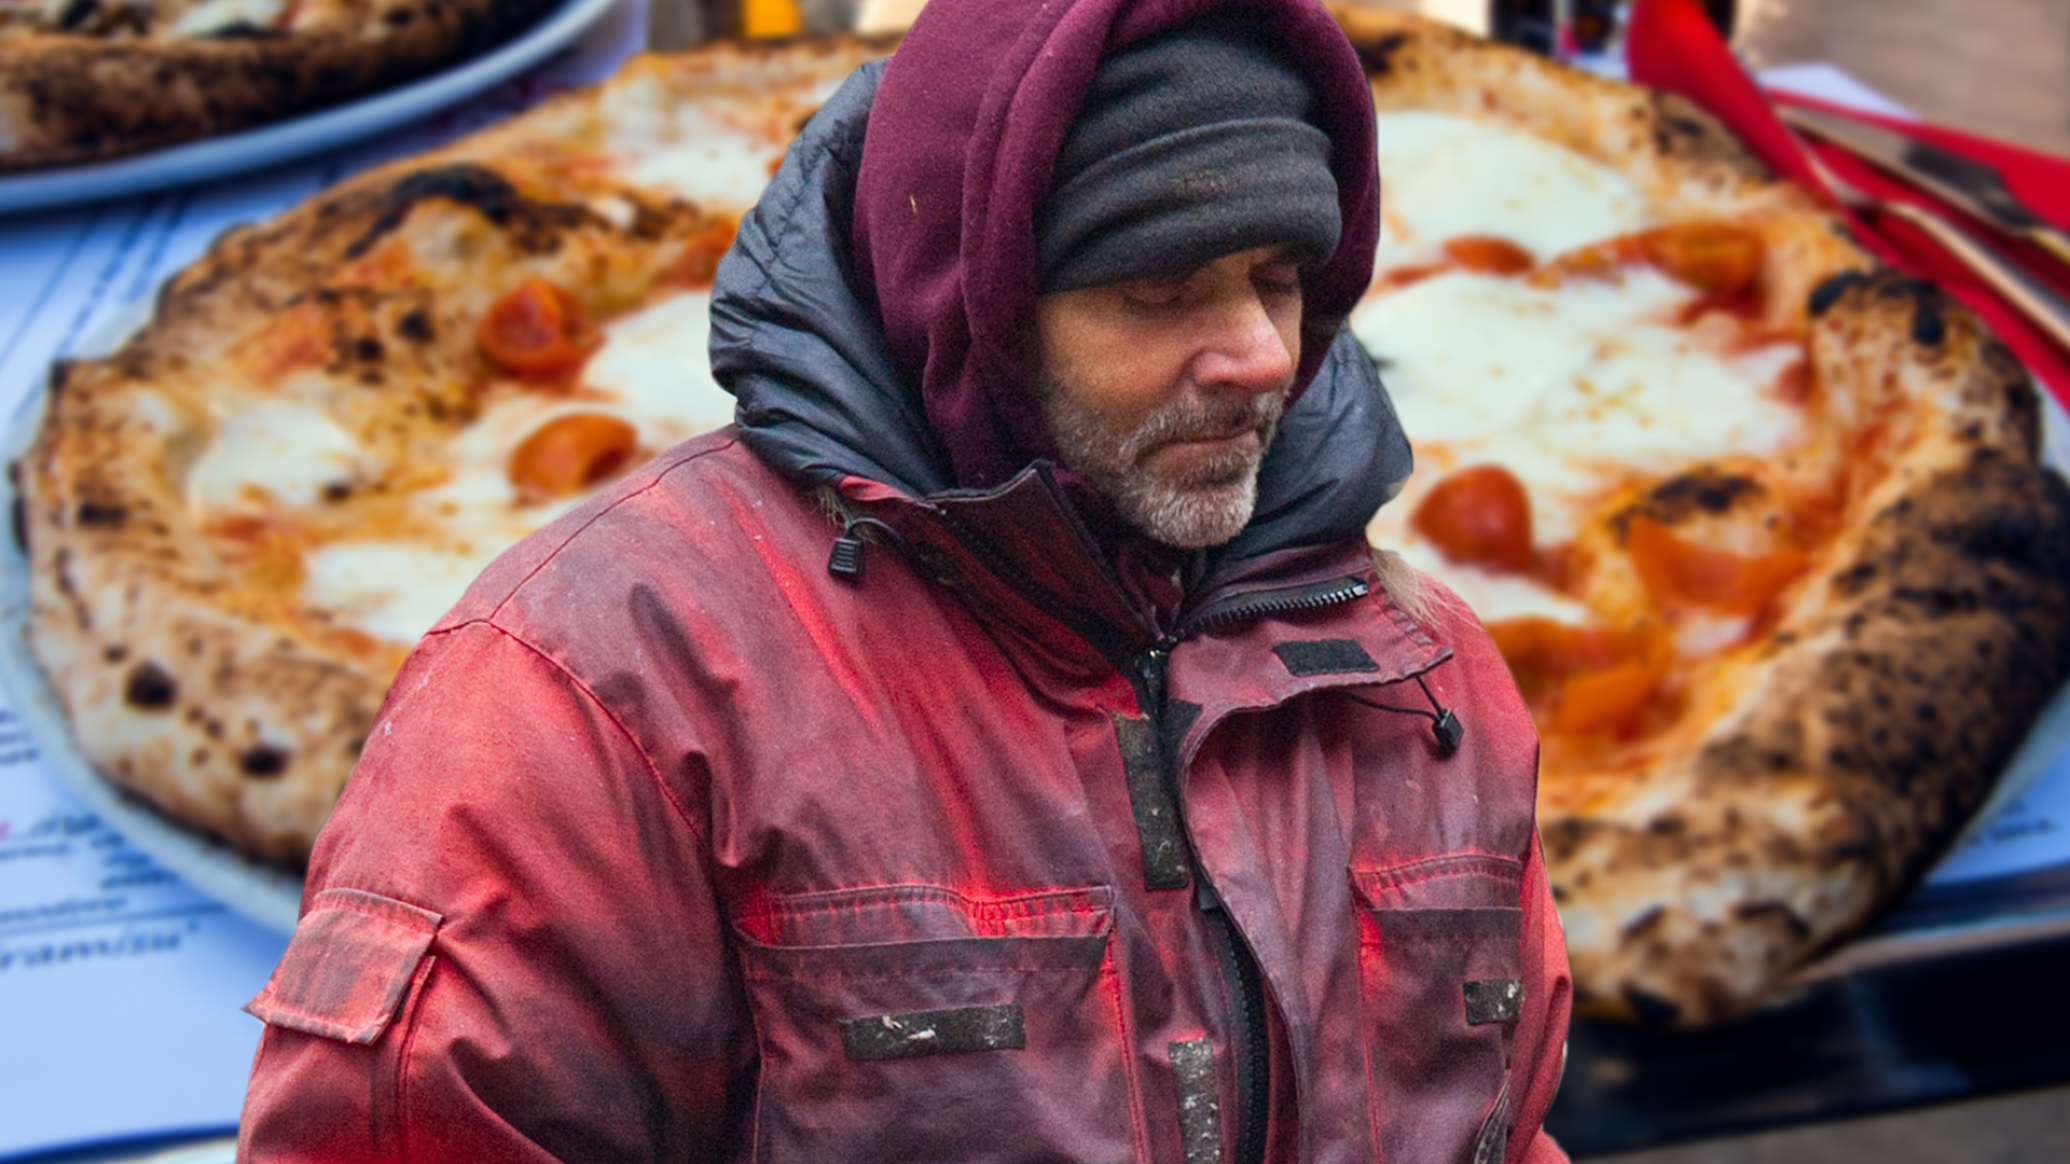 24 бомжа. Бомж с пиццей. Нищий мужчина. Бездомный.